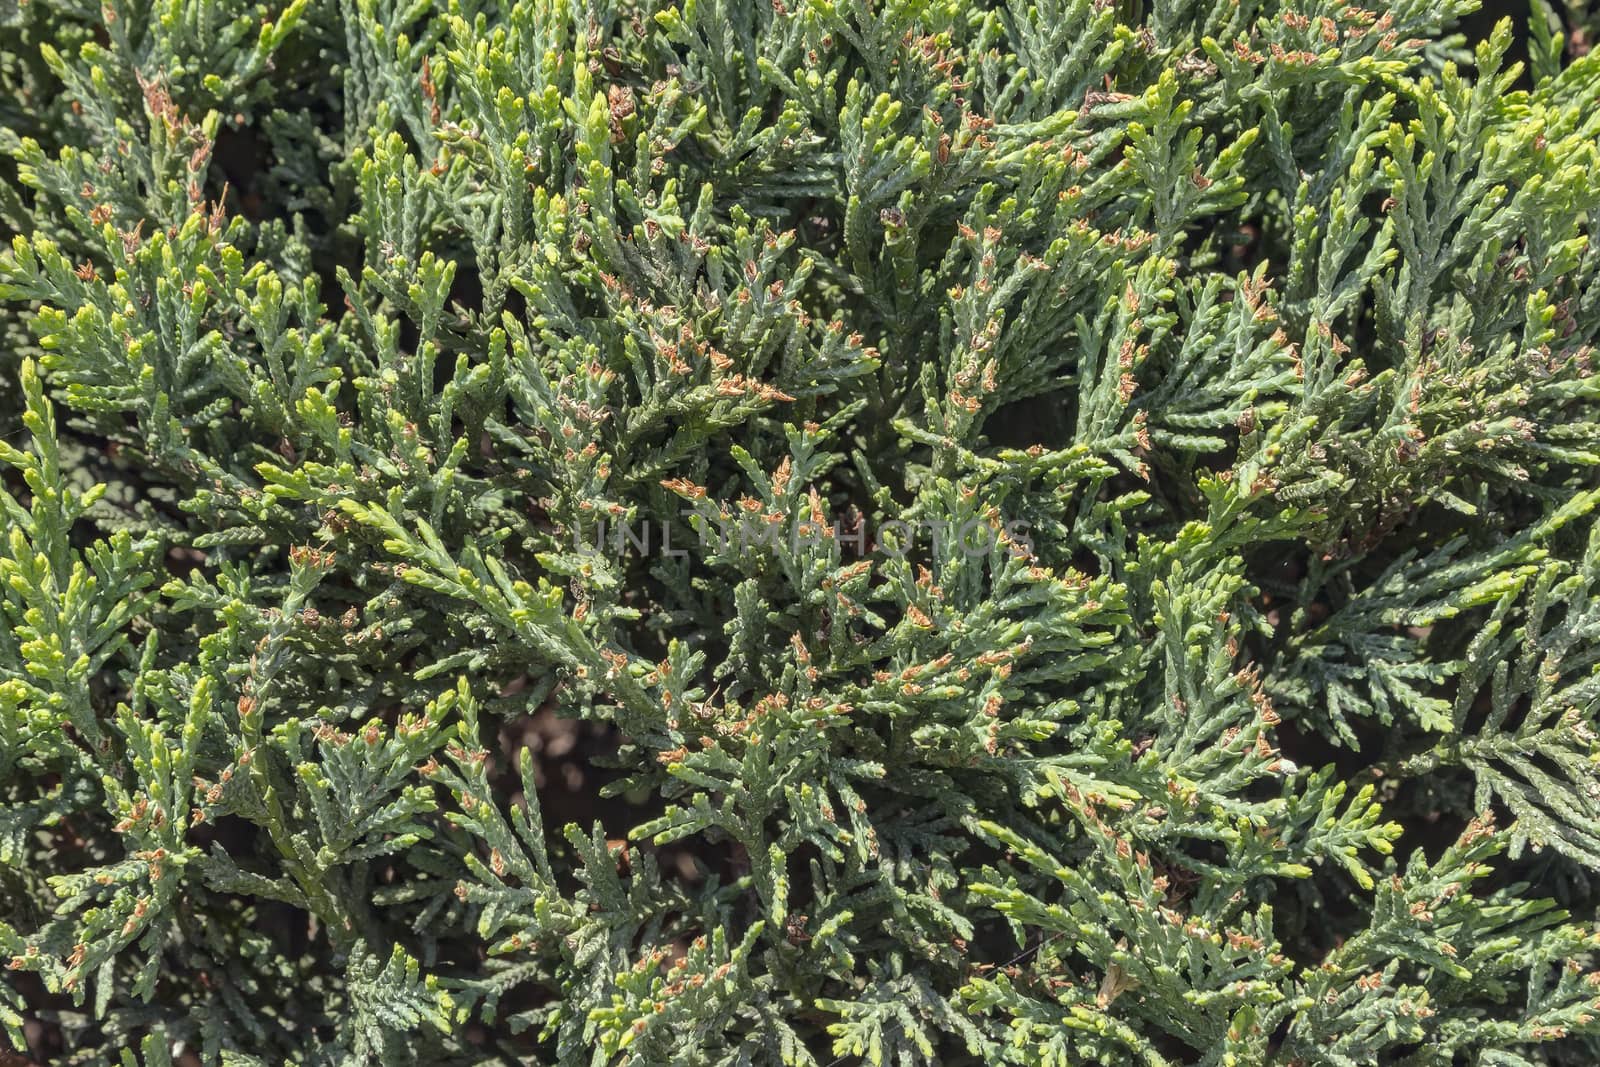  fresh fir/spruce,pine/ branch by EdVal